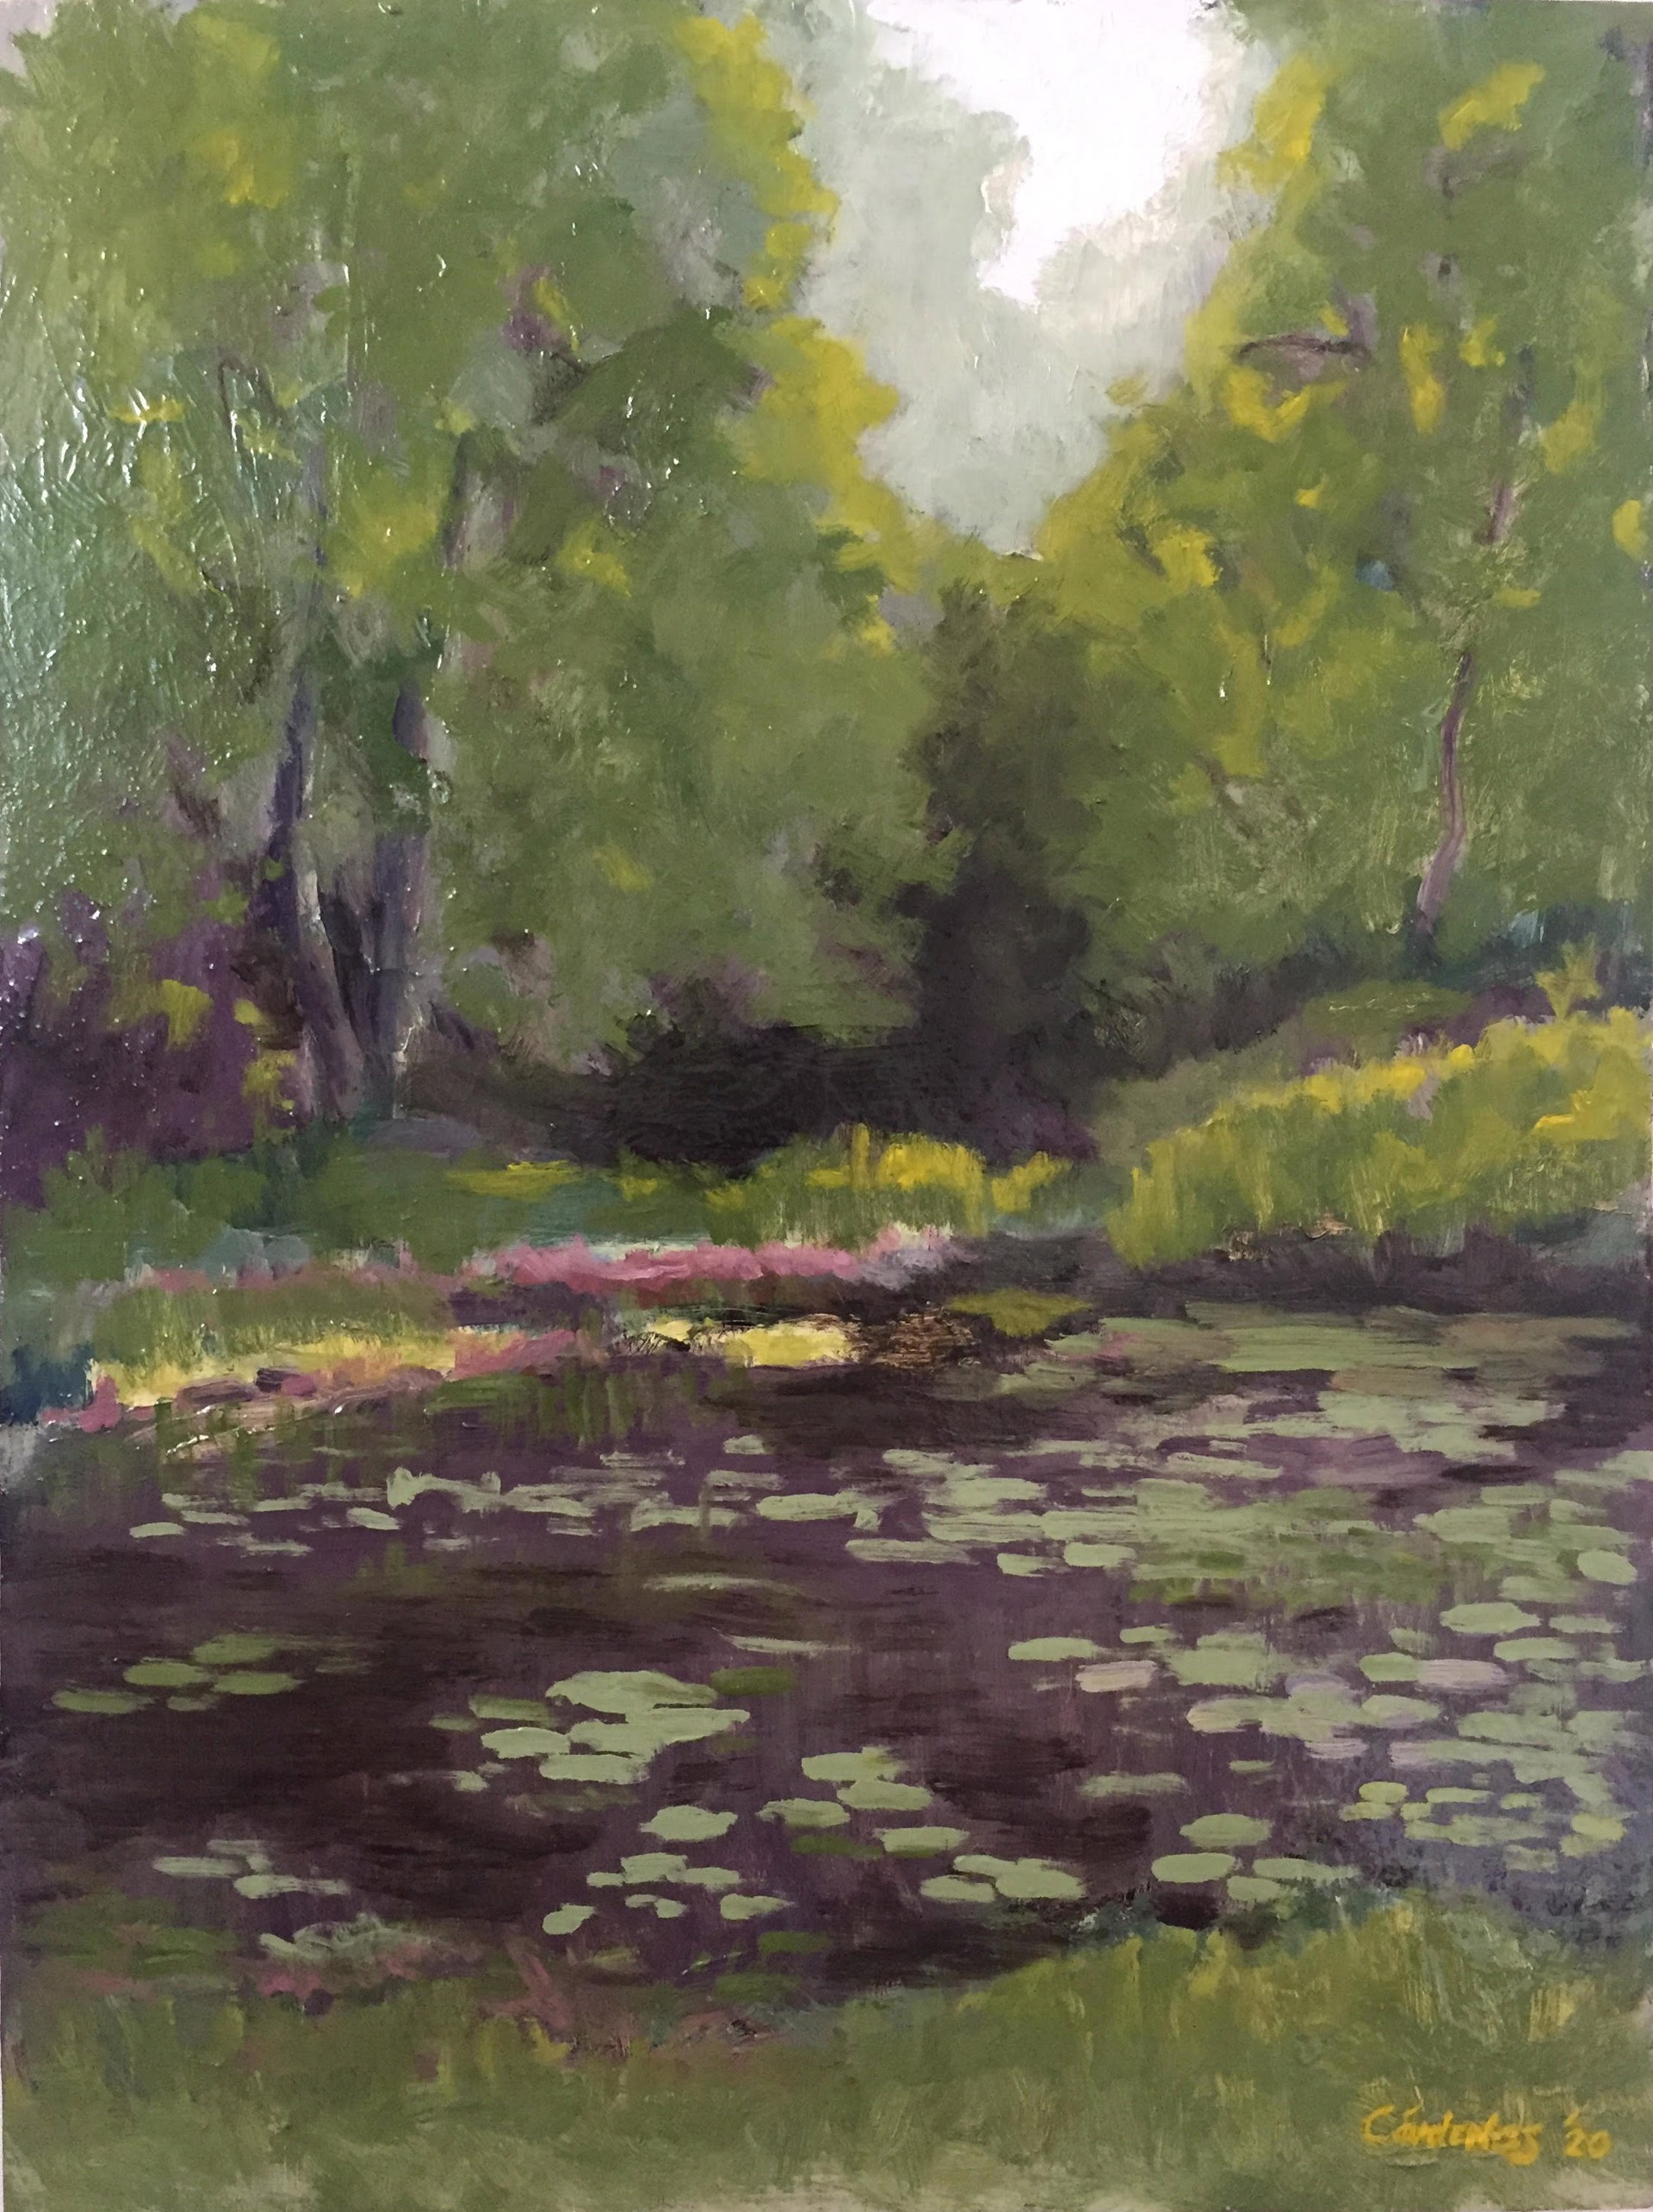 Aquinas Pond in June by Kathryn Cárdenas